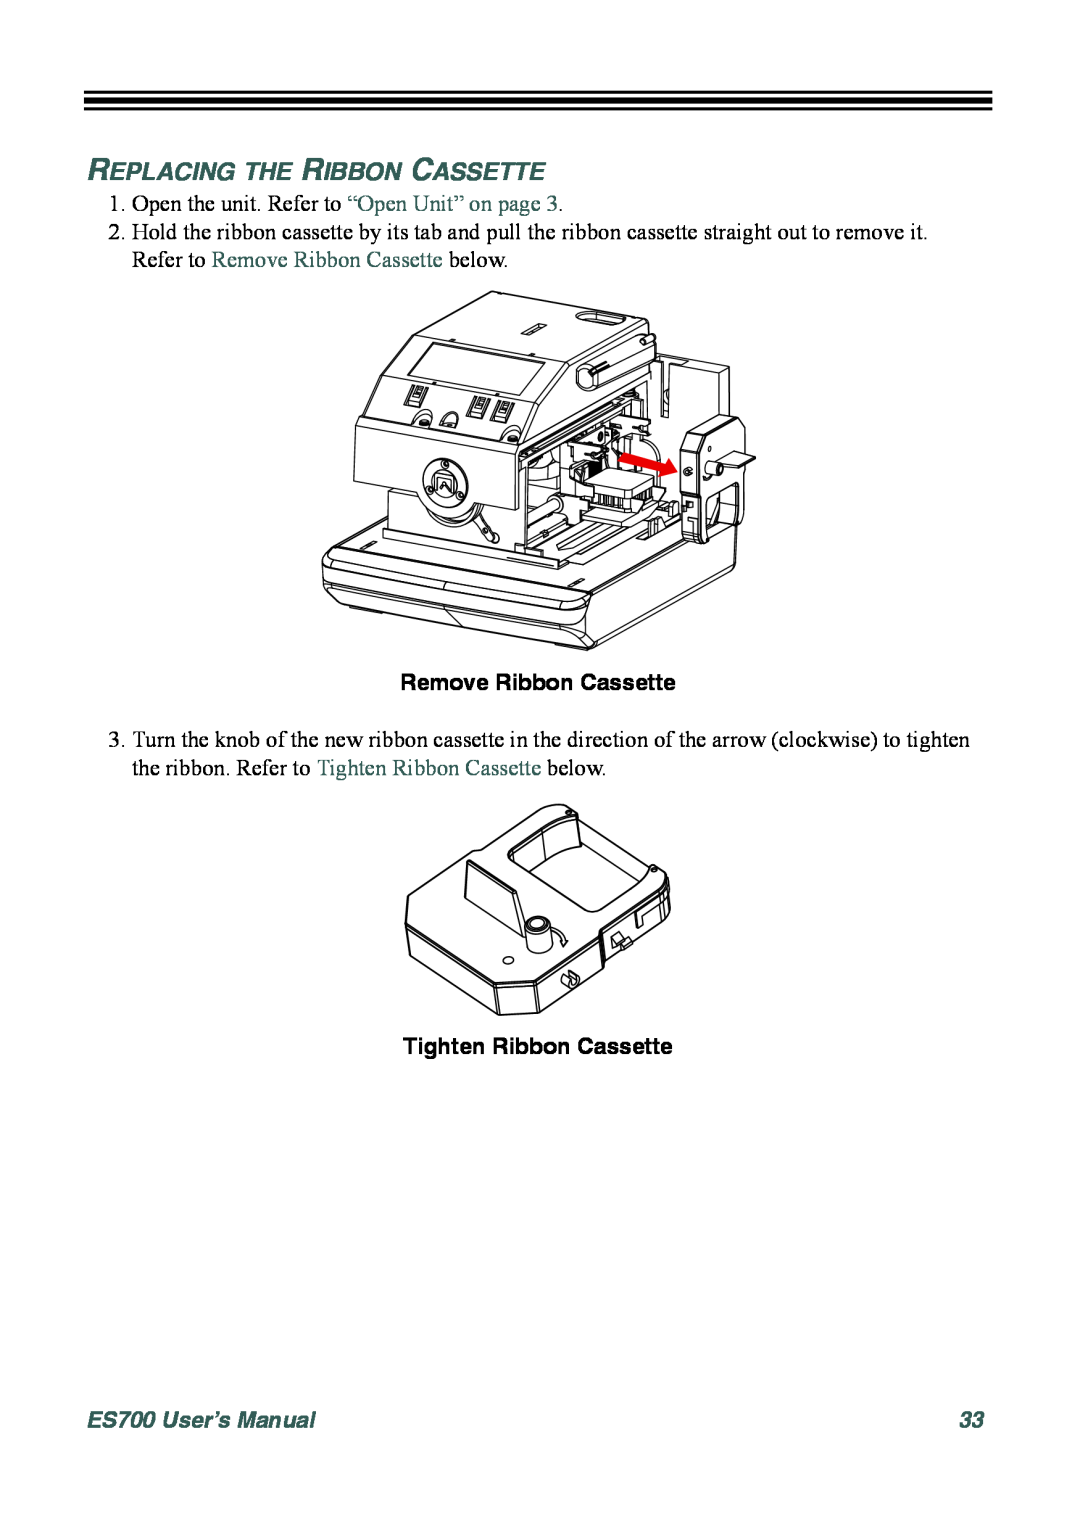 Acroprint ES700 user manual Replacing The Ribbon Cassette, Remove Ribbon Cassette, Tighten Ribbon Cassette 